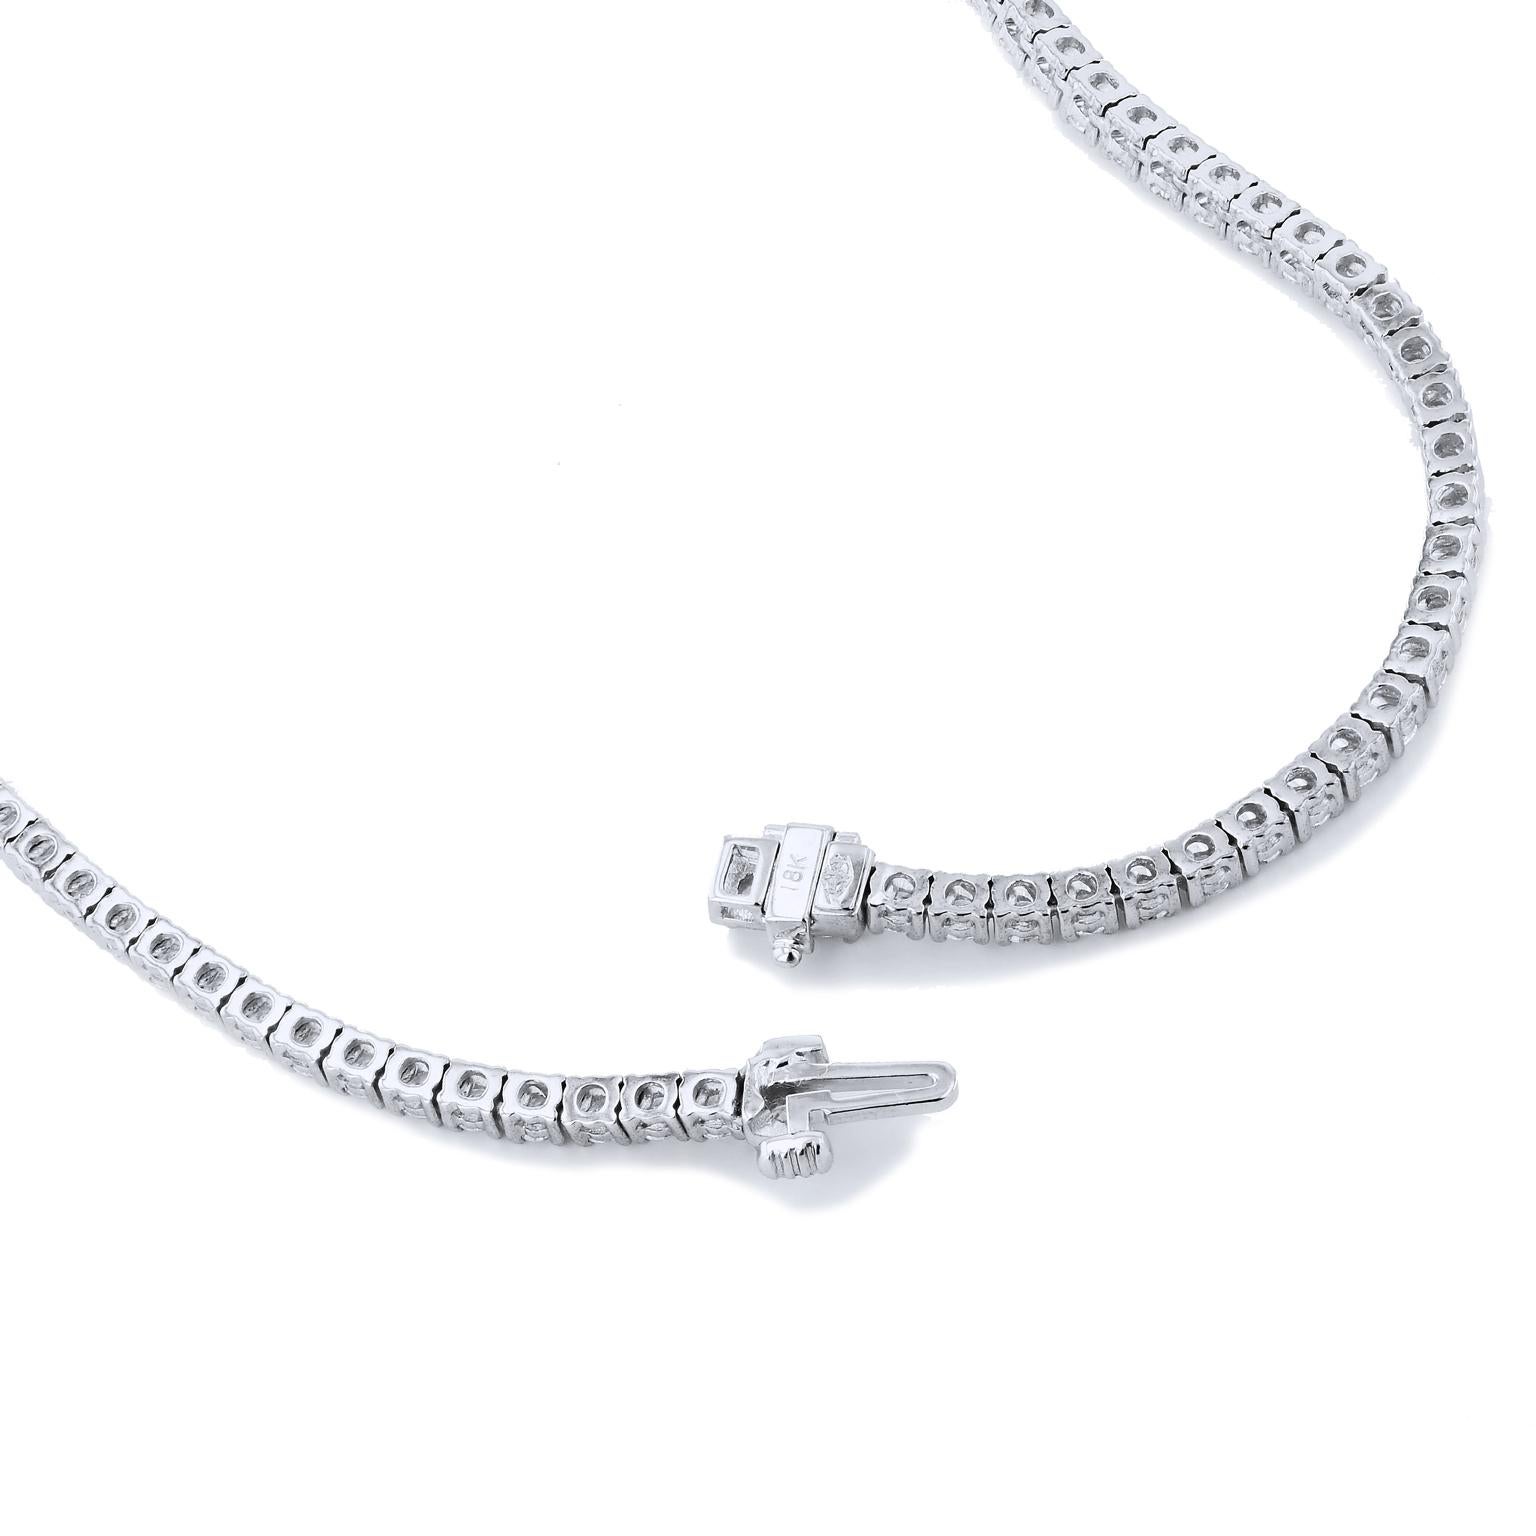 Brilliant Cut 8.27 Carat Diamond Riviera Necklace, set in 18 Karat White Gold 18 Inches Long